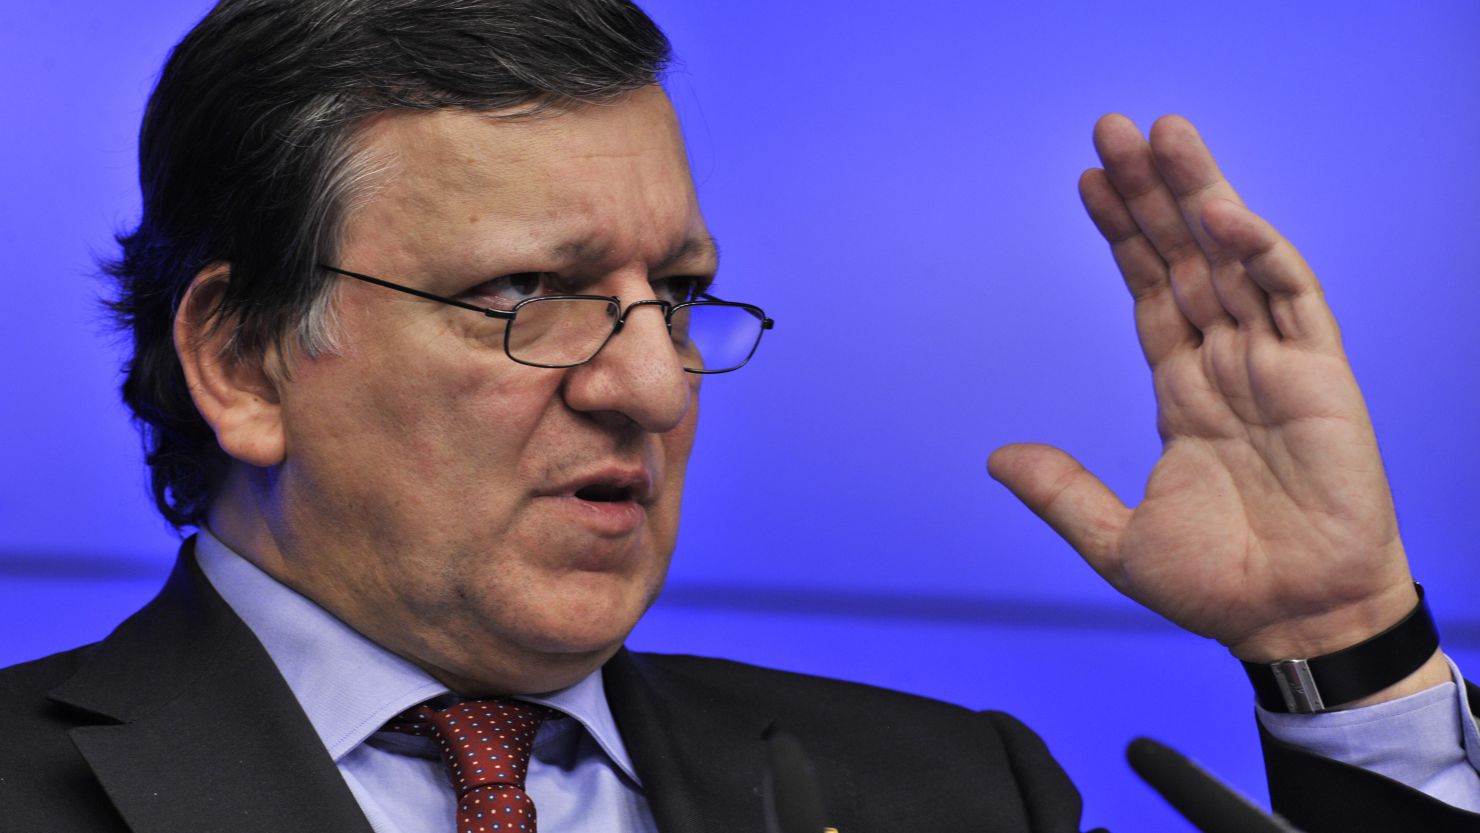   European Commission President Jose Manuel Barroso on January 30, 2012 in Brussels 